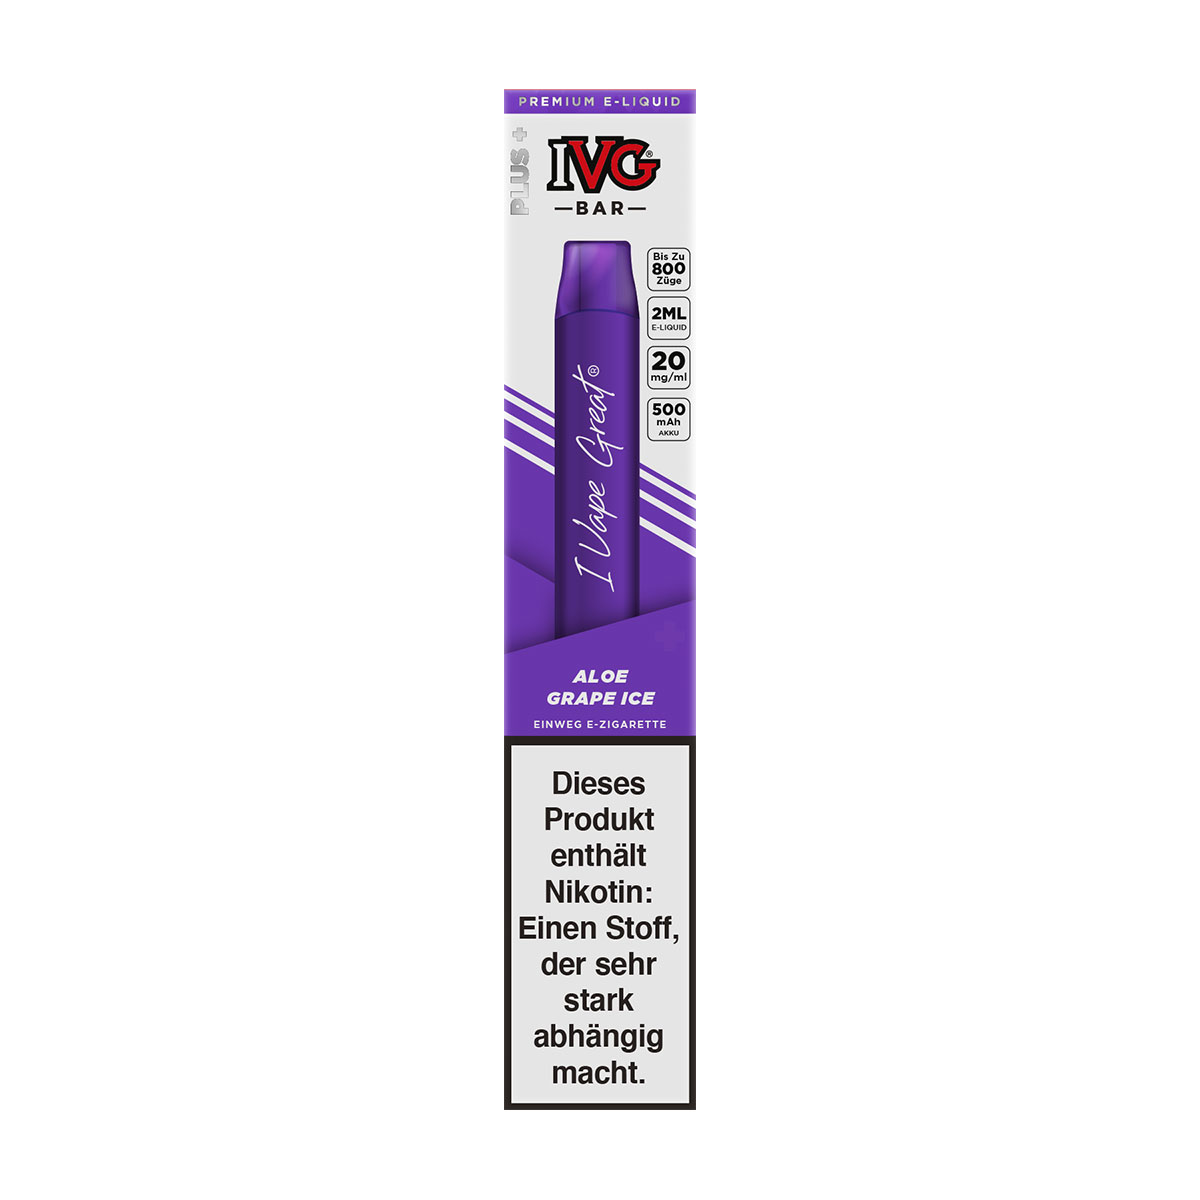 IVG BAR Aloe Grape Ice Einweg E-Zigarette 20mg/ml *Abverkauf*